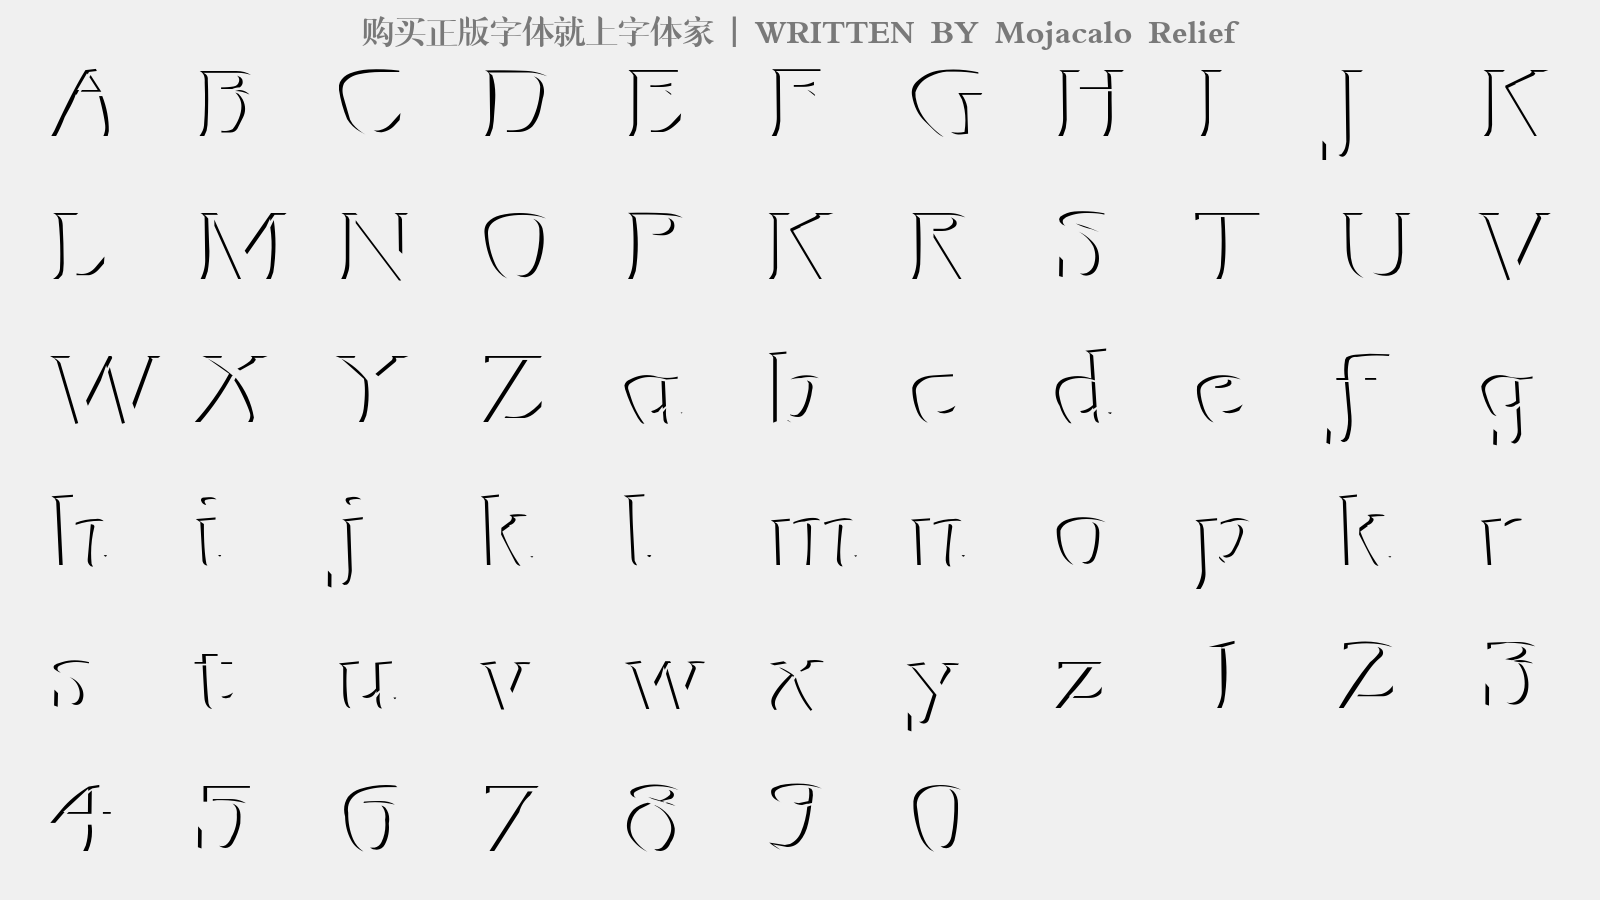 Mojacalo Relief - 大写字母/小写字母/数字